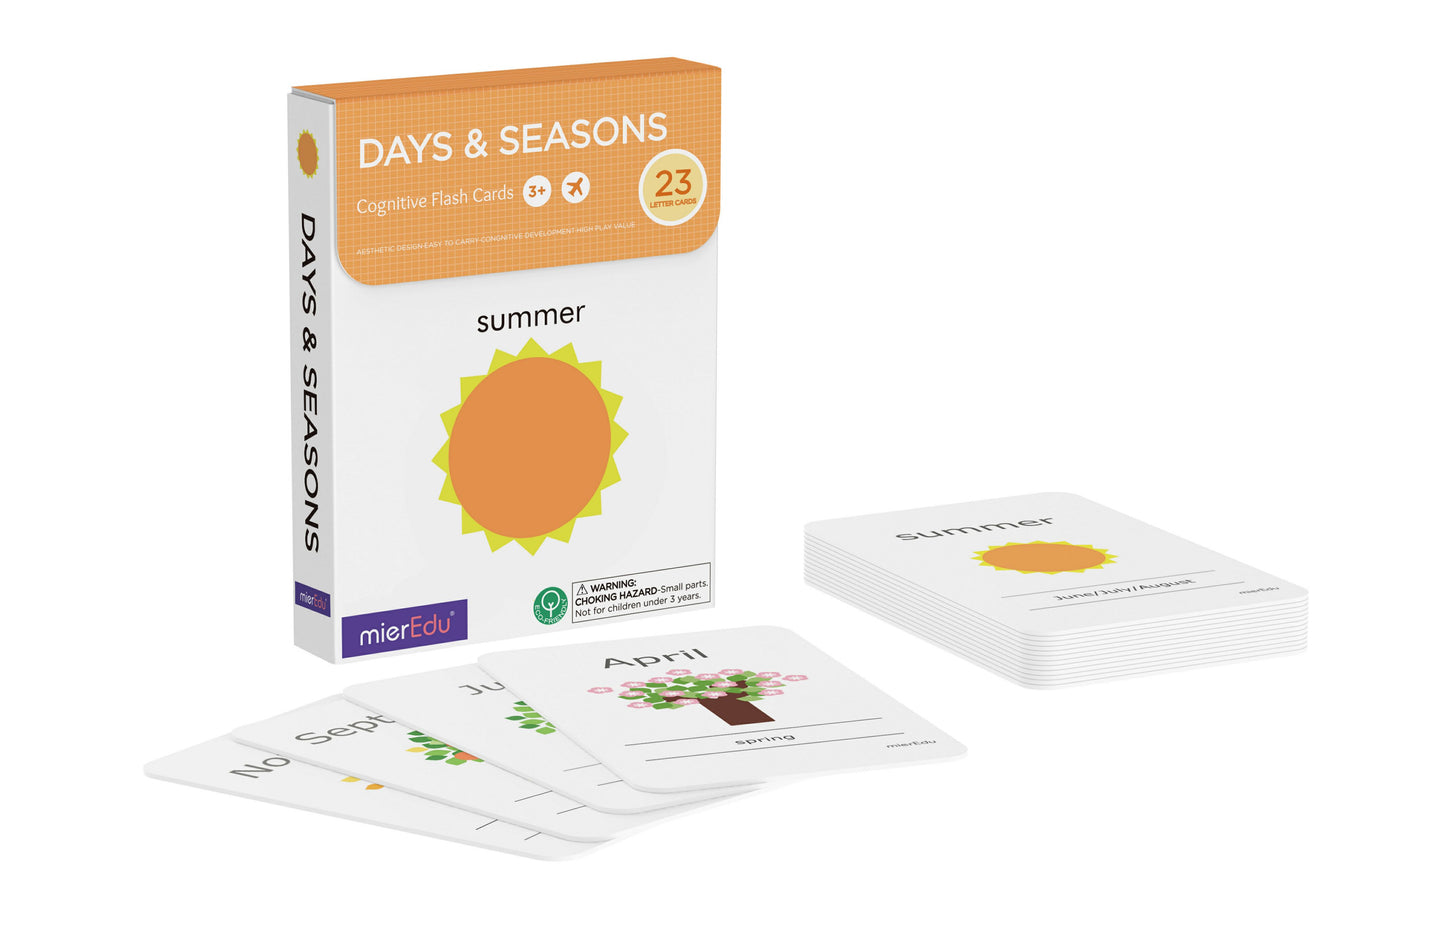 Cognitive Flash Card – Days & Seasons